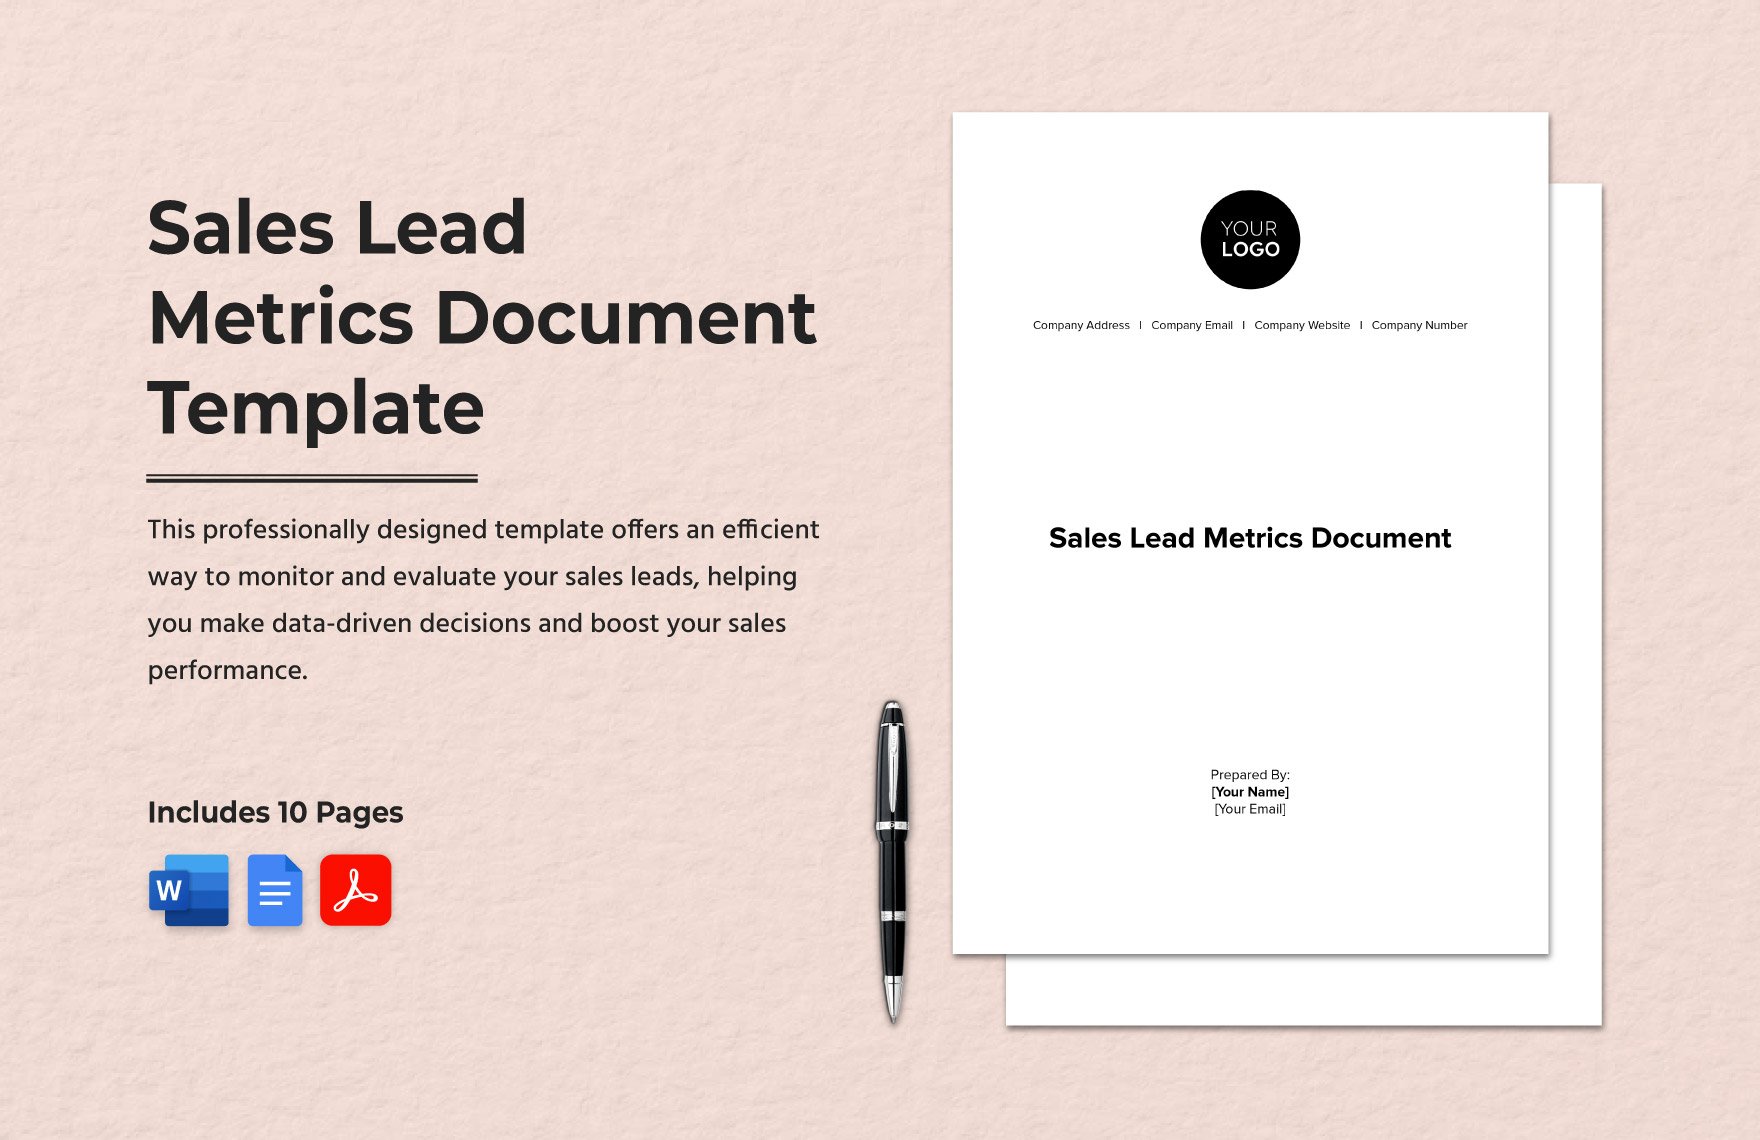 Sales Lead Metrics Document Template in Word, Google Docs, PNG